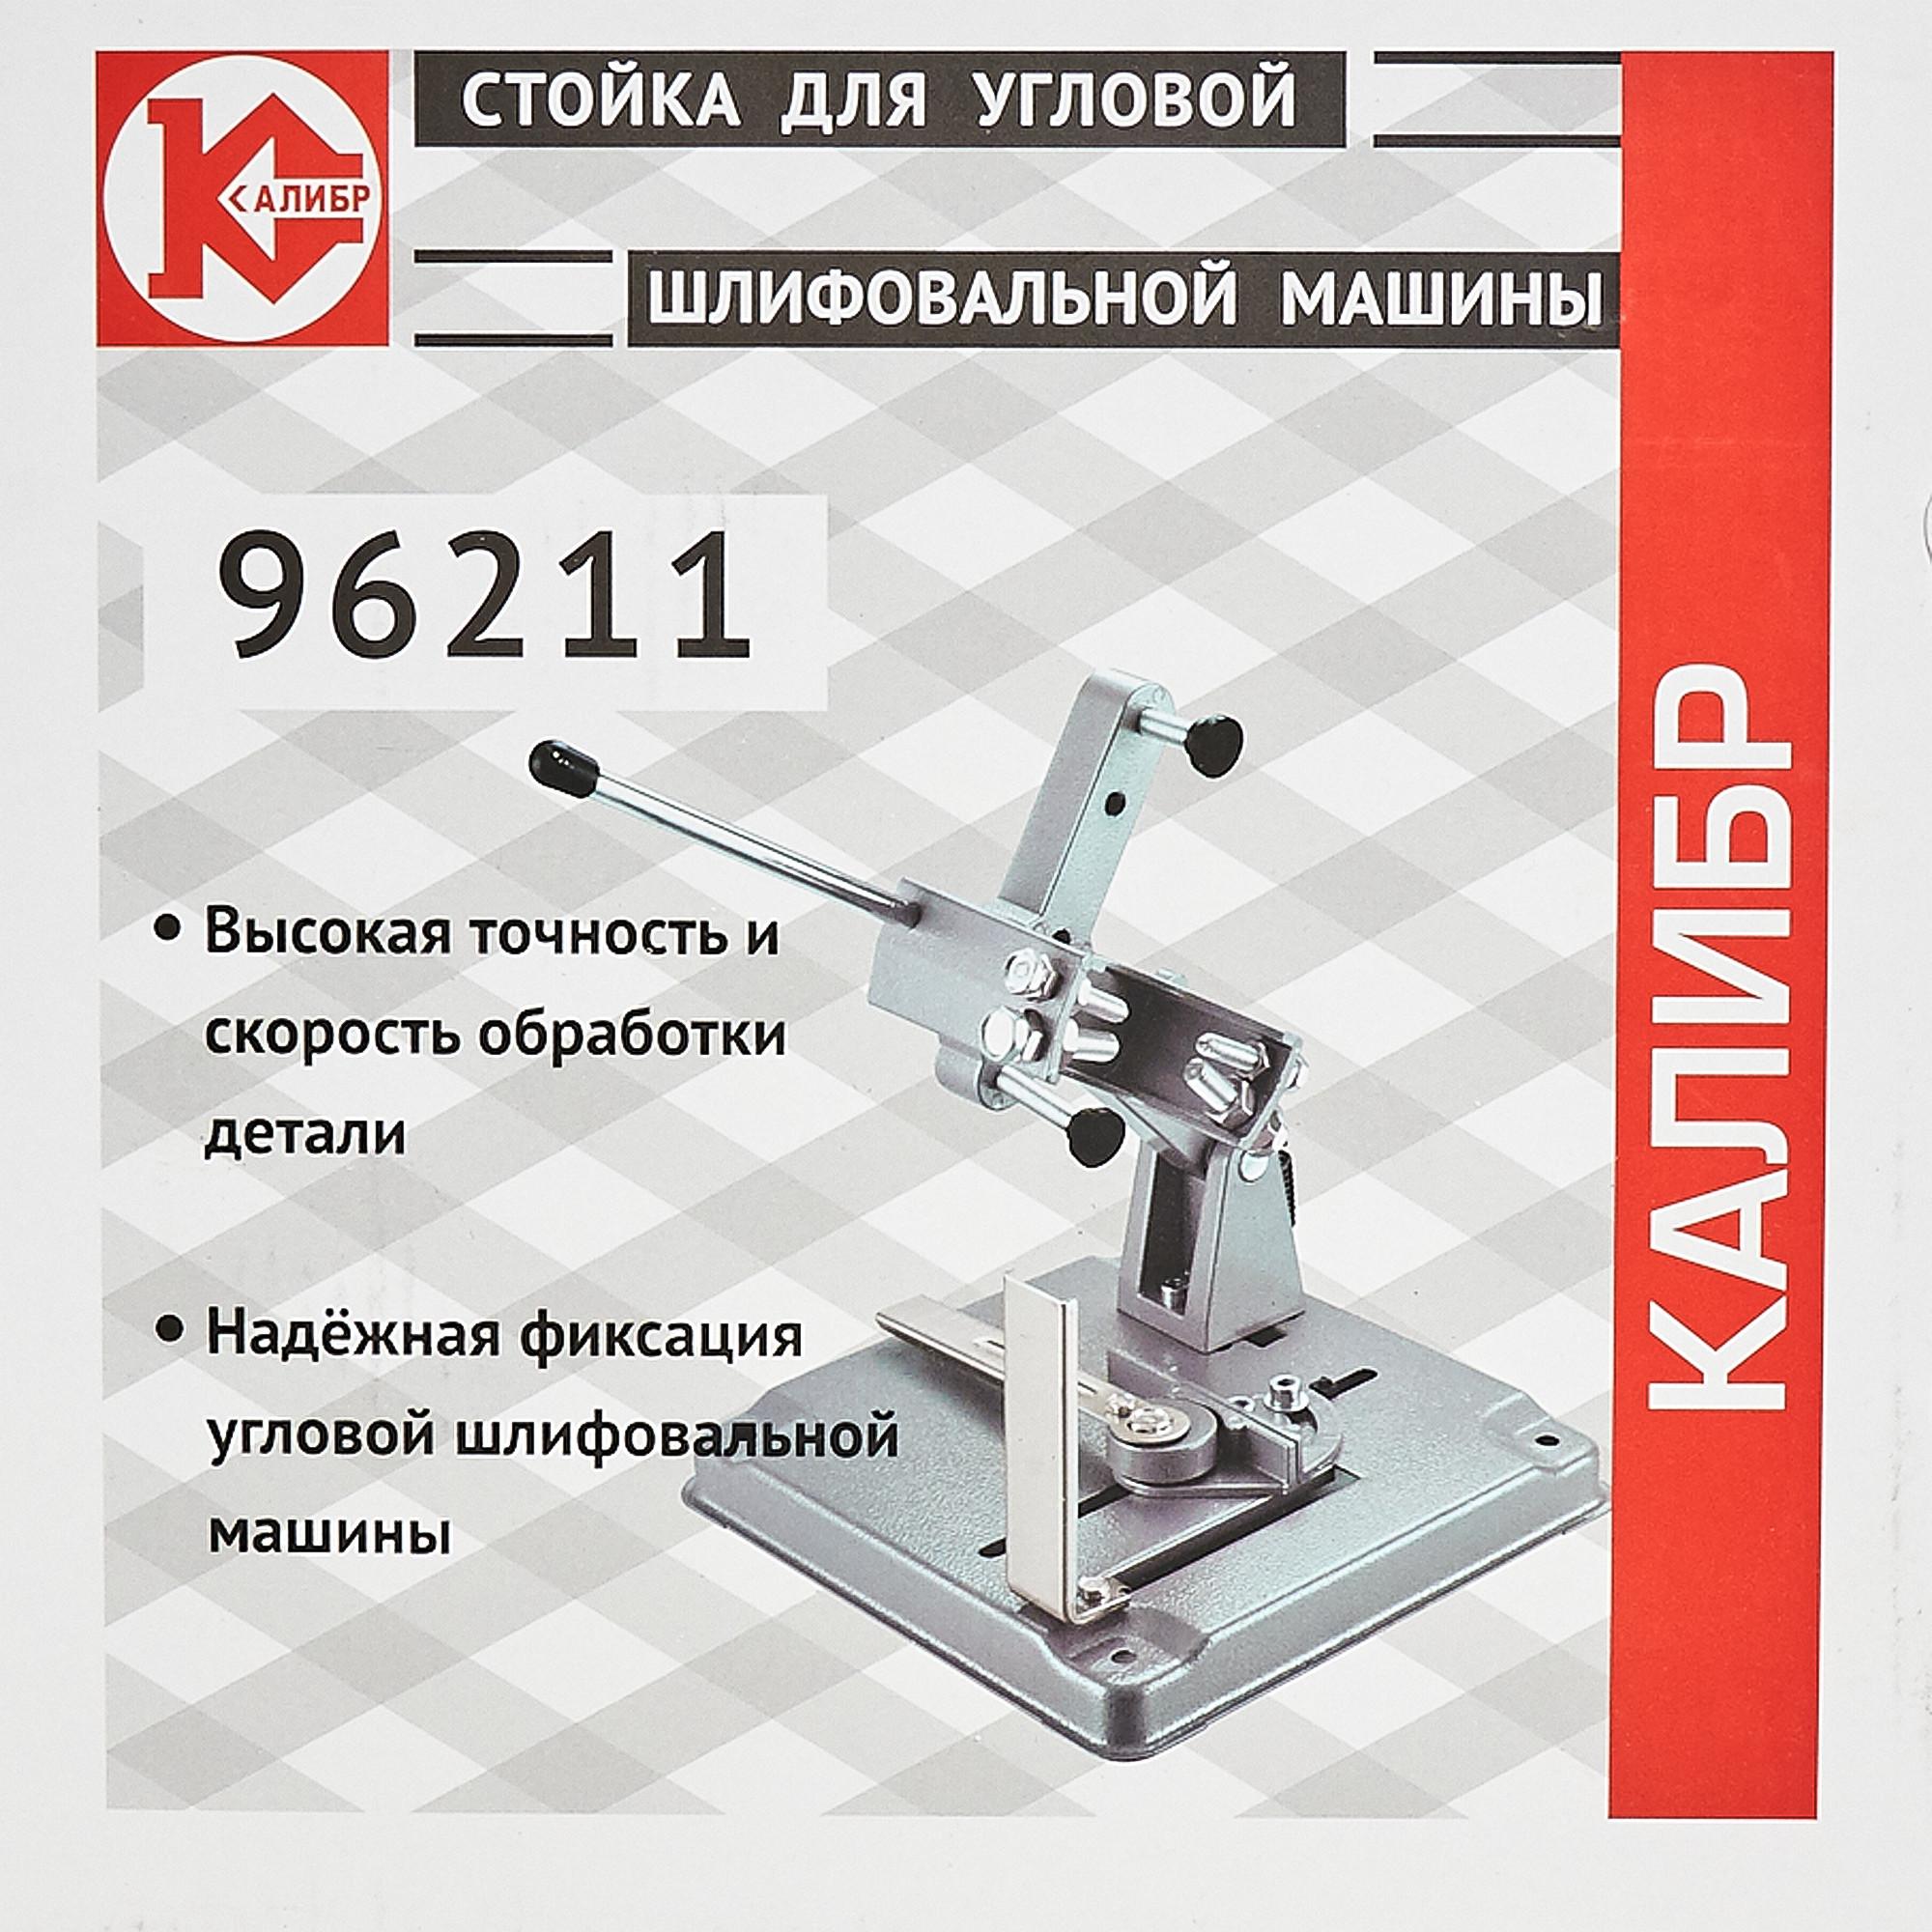  Калибр для УШМ 115-125 мм –   по цене 10850 тенге .